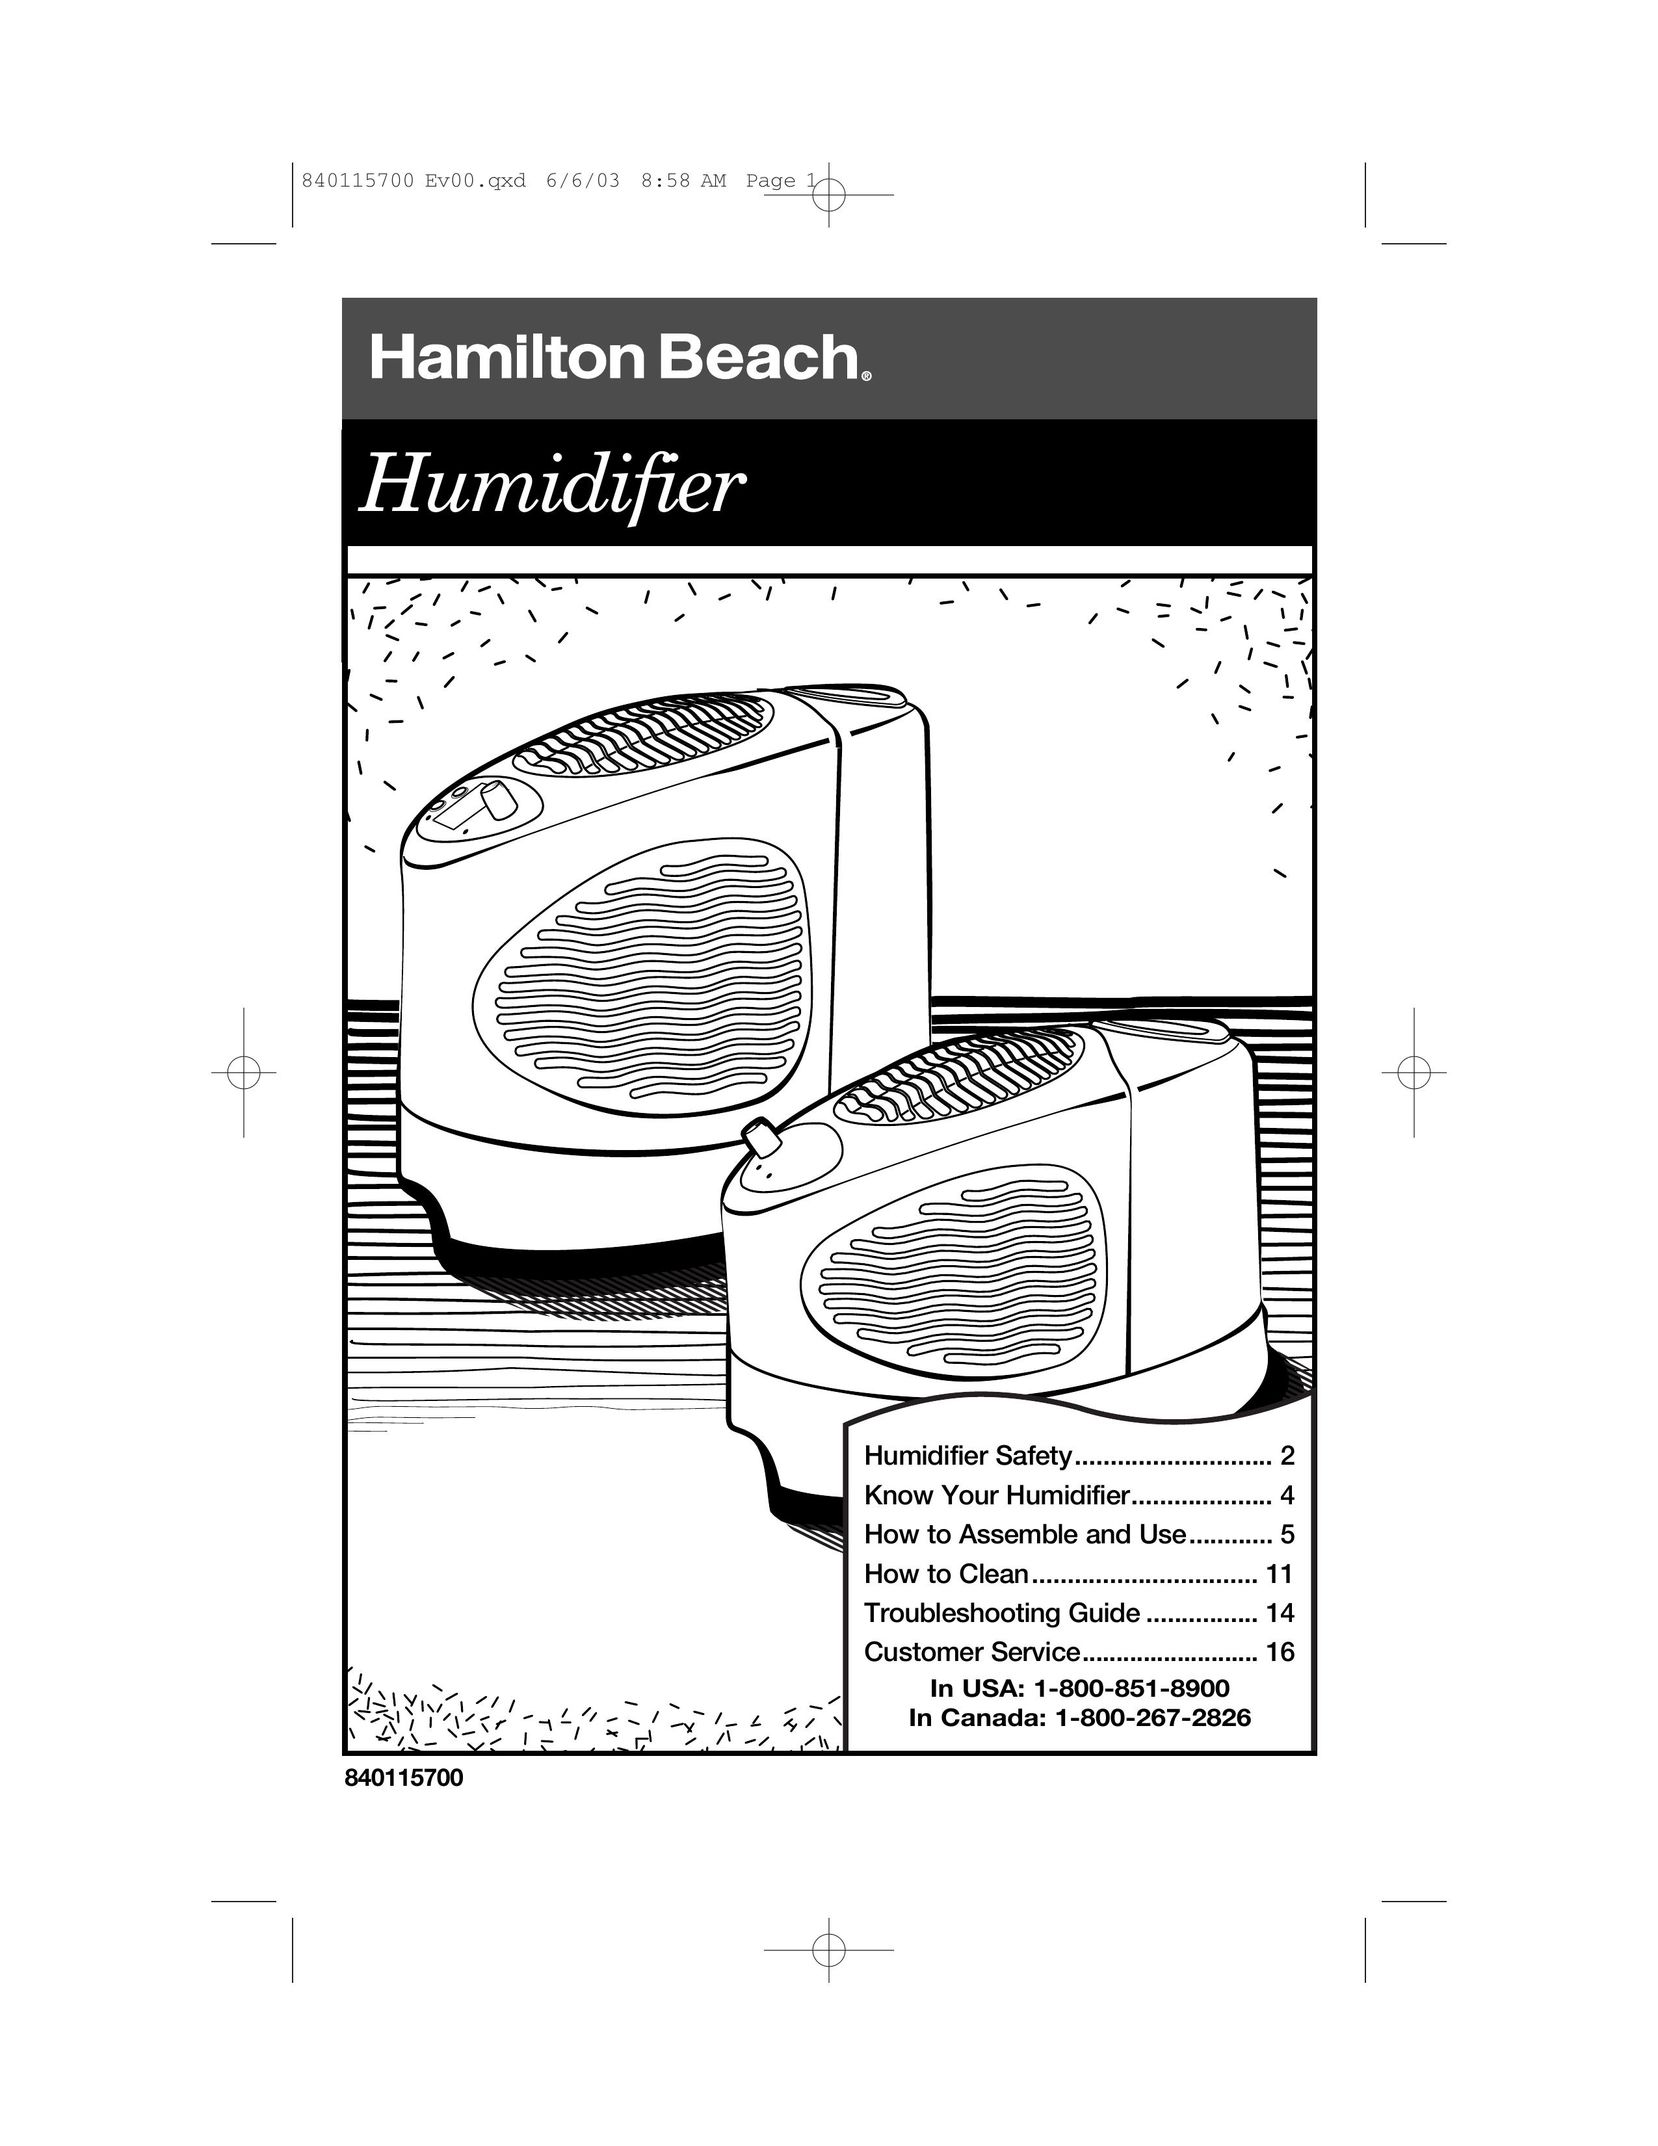 Hamilton Beach 05910 Humidifier User Manual